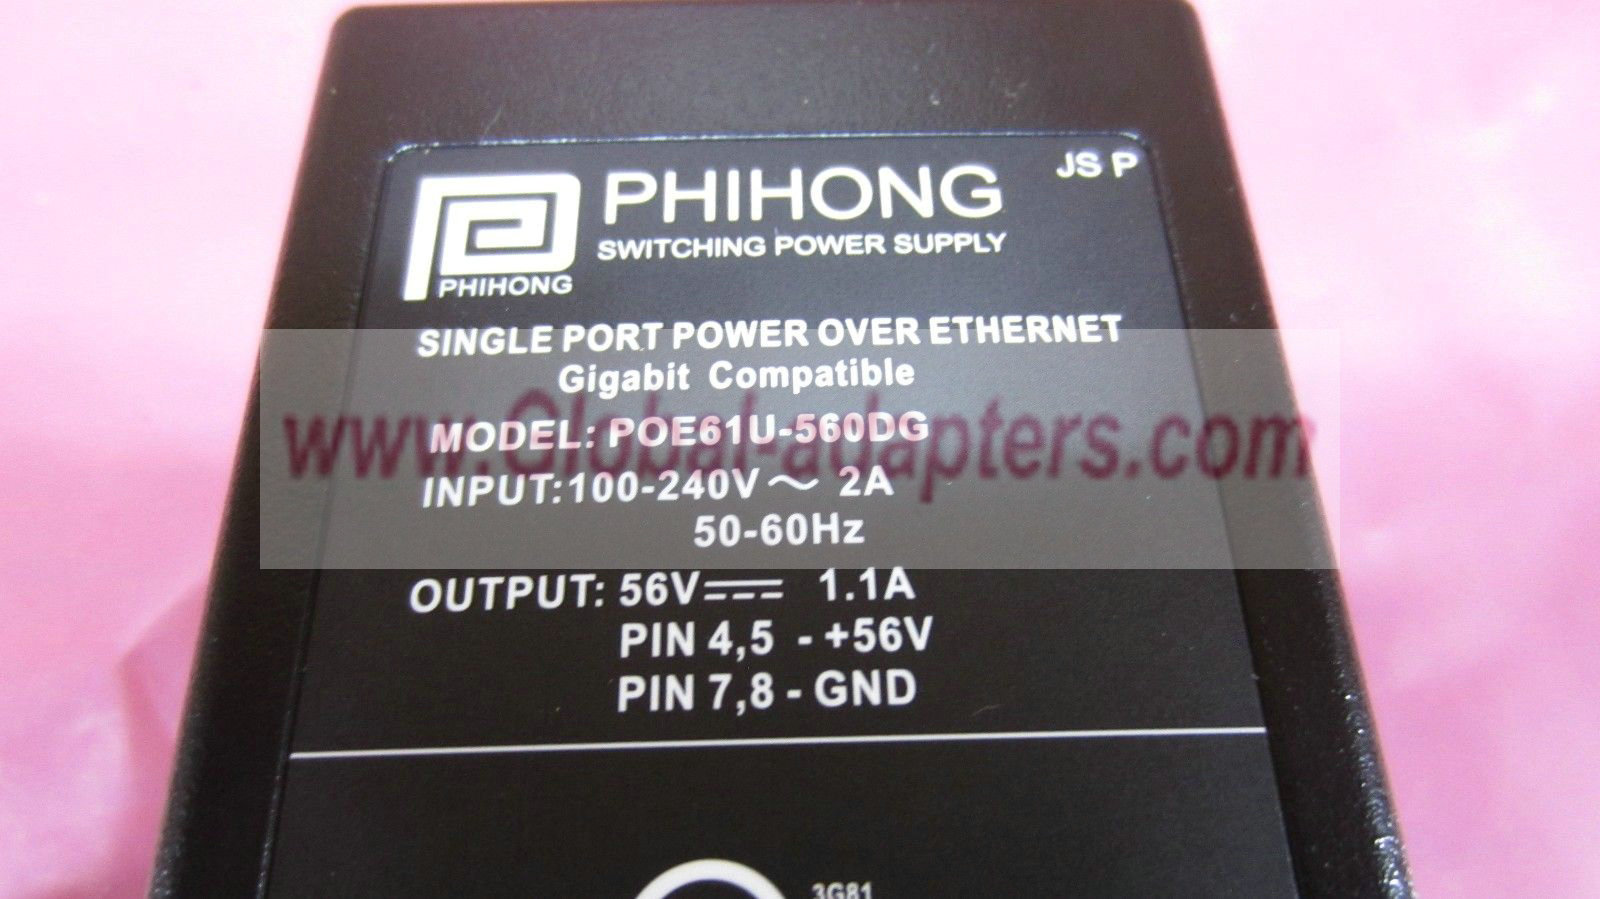 NEW 56V 1.1A Phihong POE61U-560DG Radio Universal Indoor Unit AC Power Adaptor